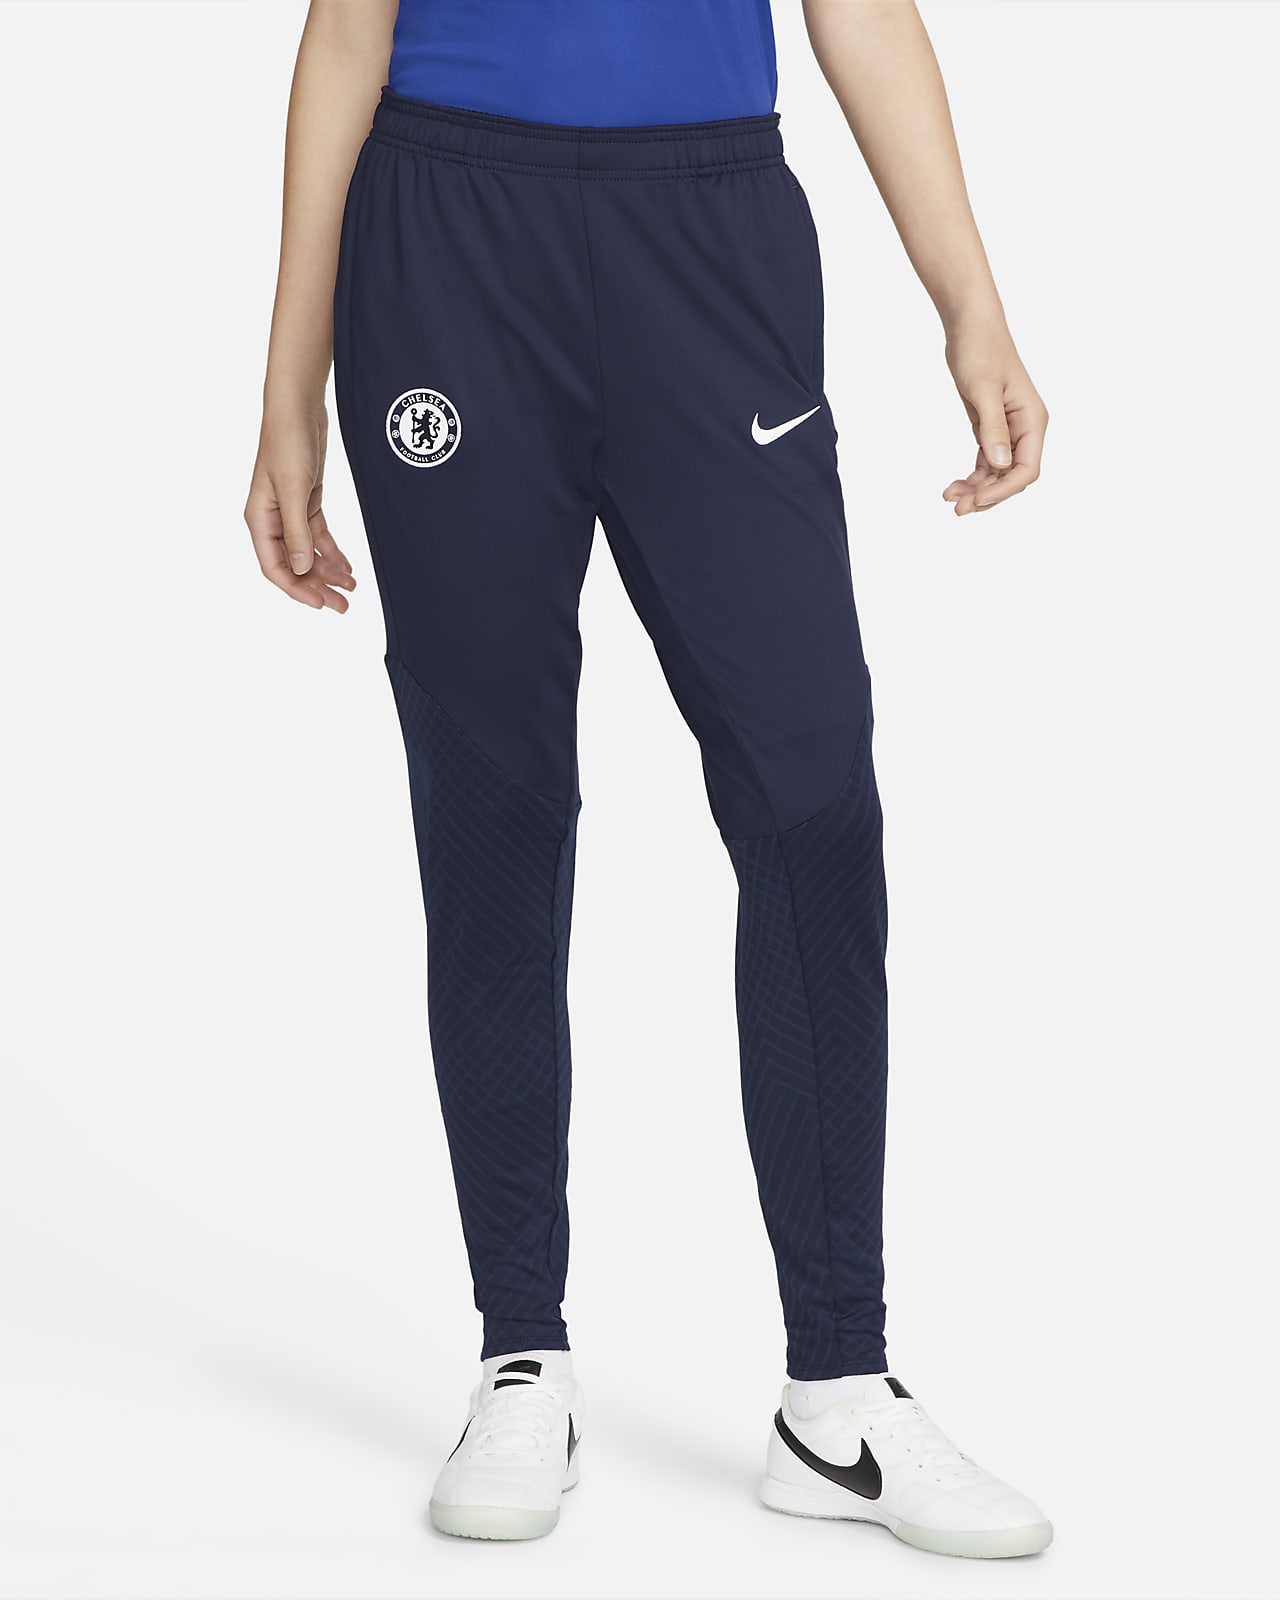 Chelsea F.C. Strike Women's Nike Dri-FIT Football Pants